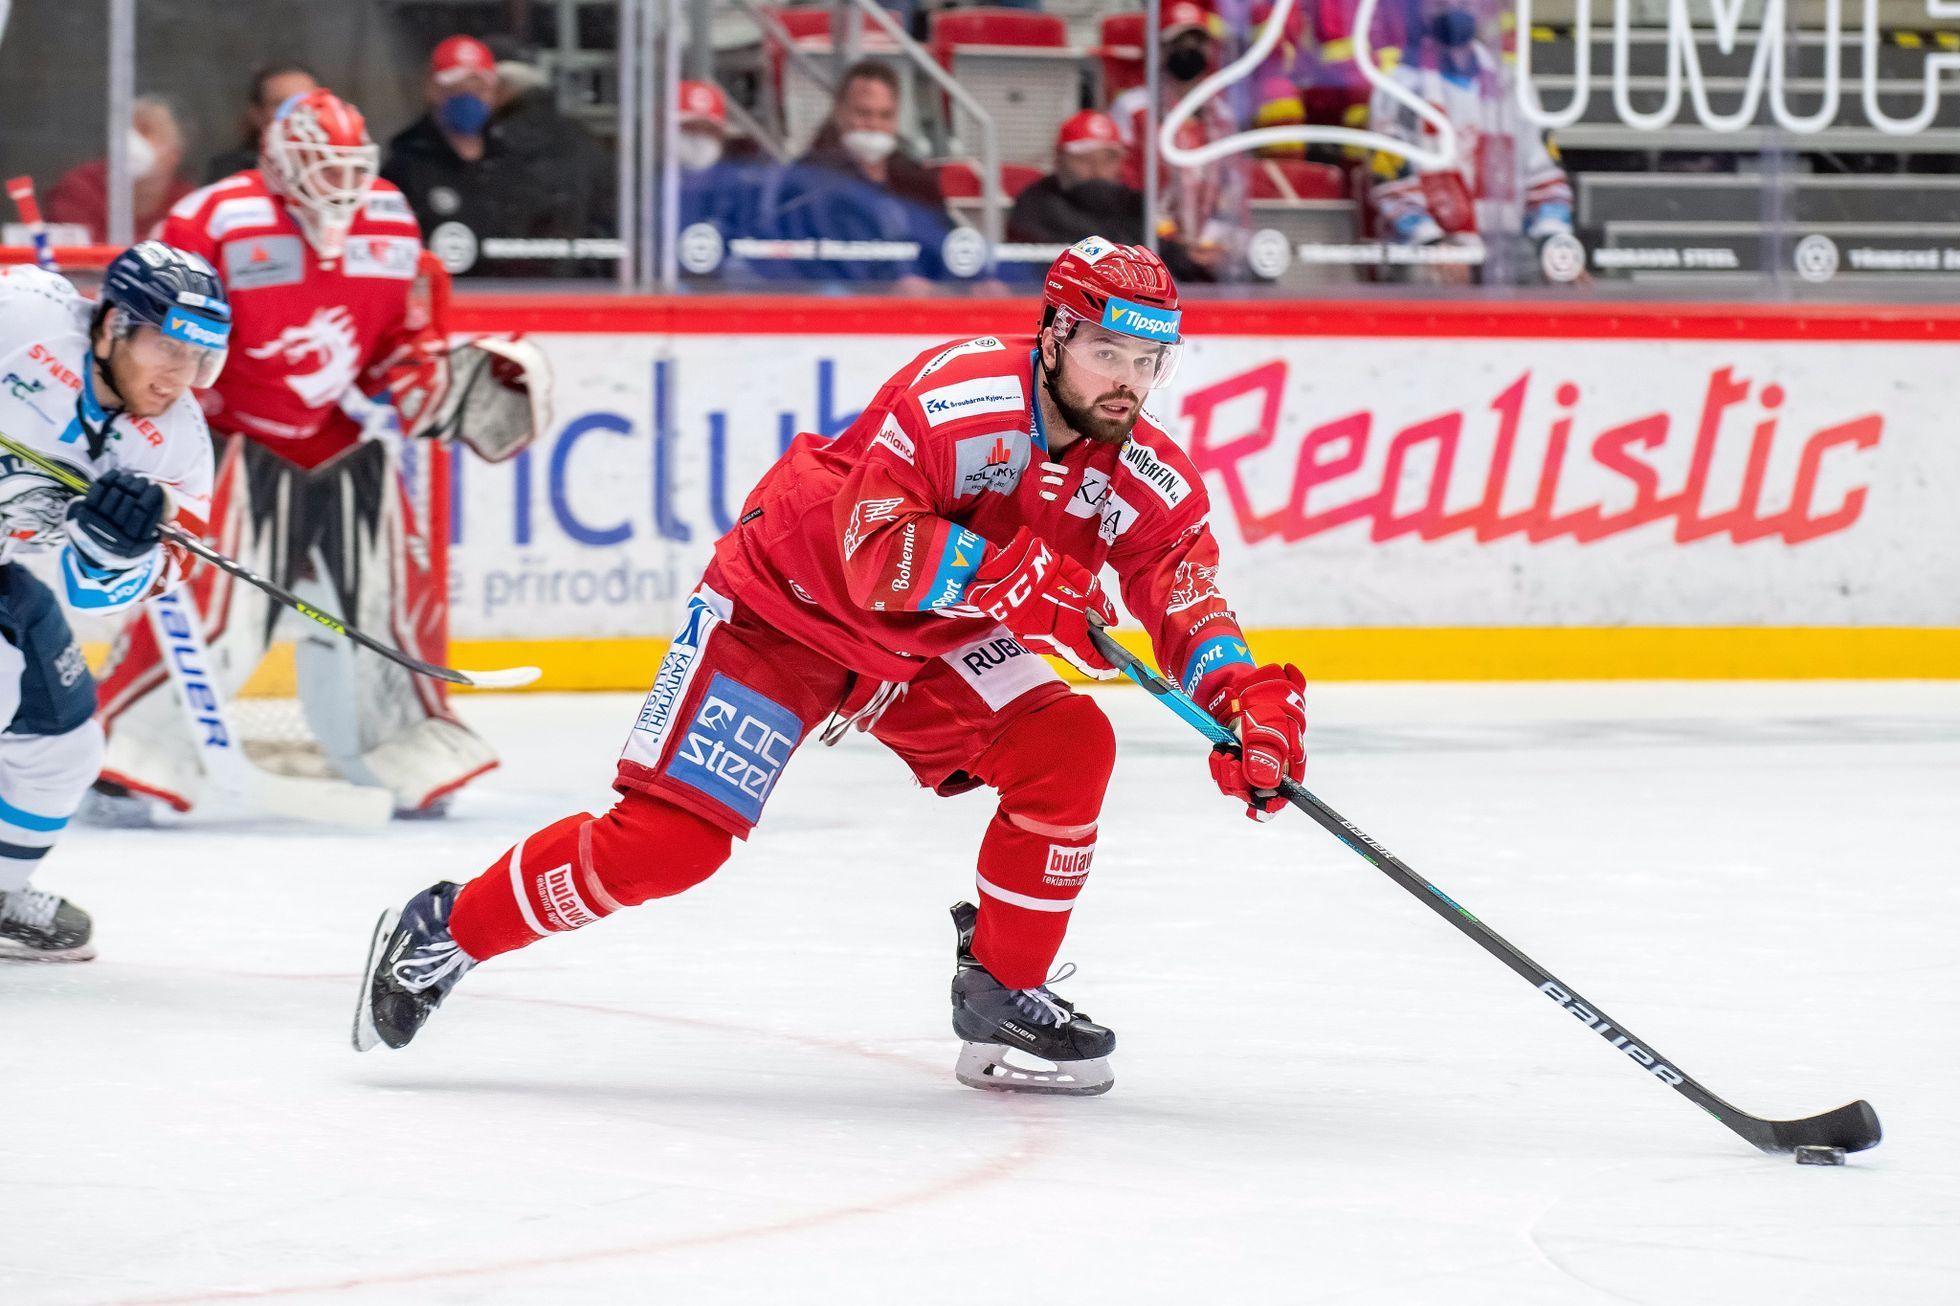 5. finále hokejové extraligy 2020/21, Třinec - Liberec: Třinecký obránce Milan Doudera